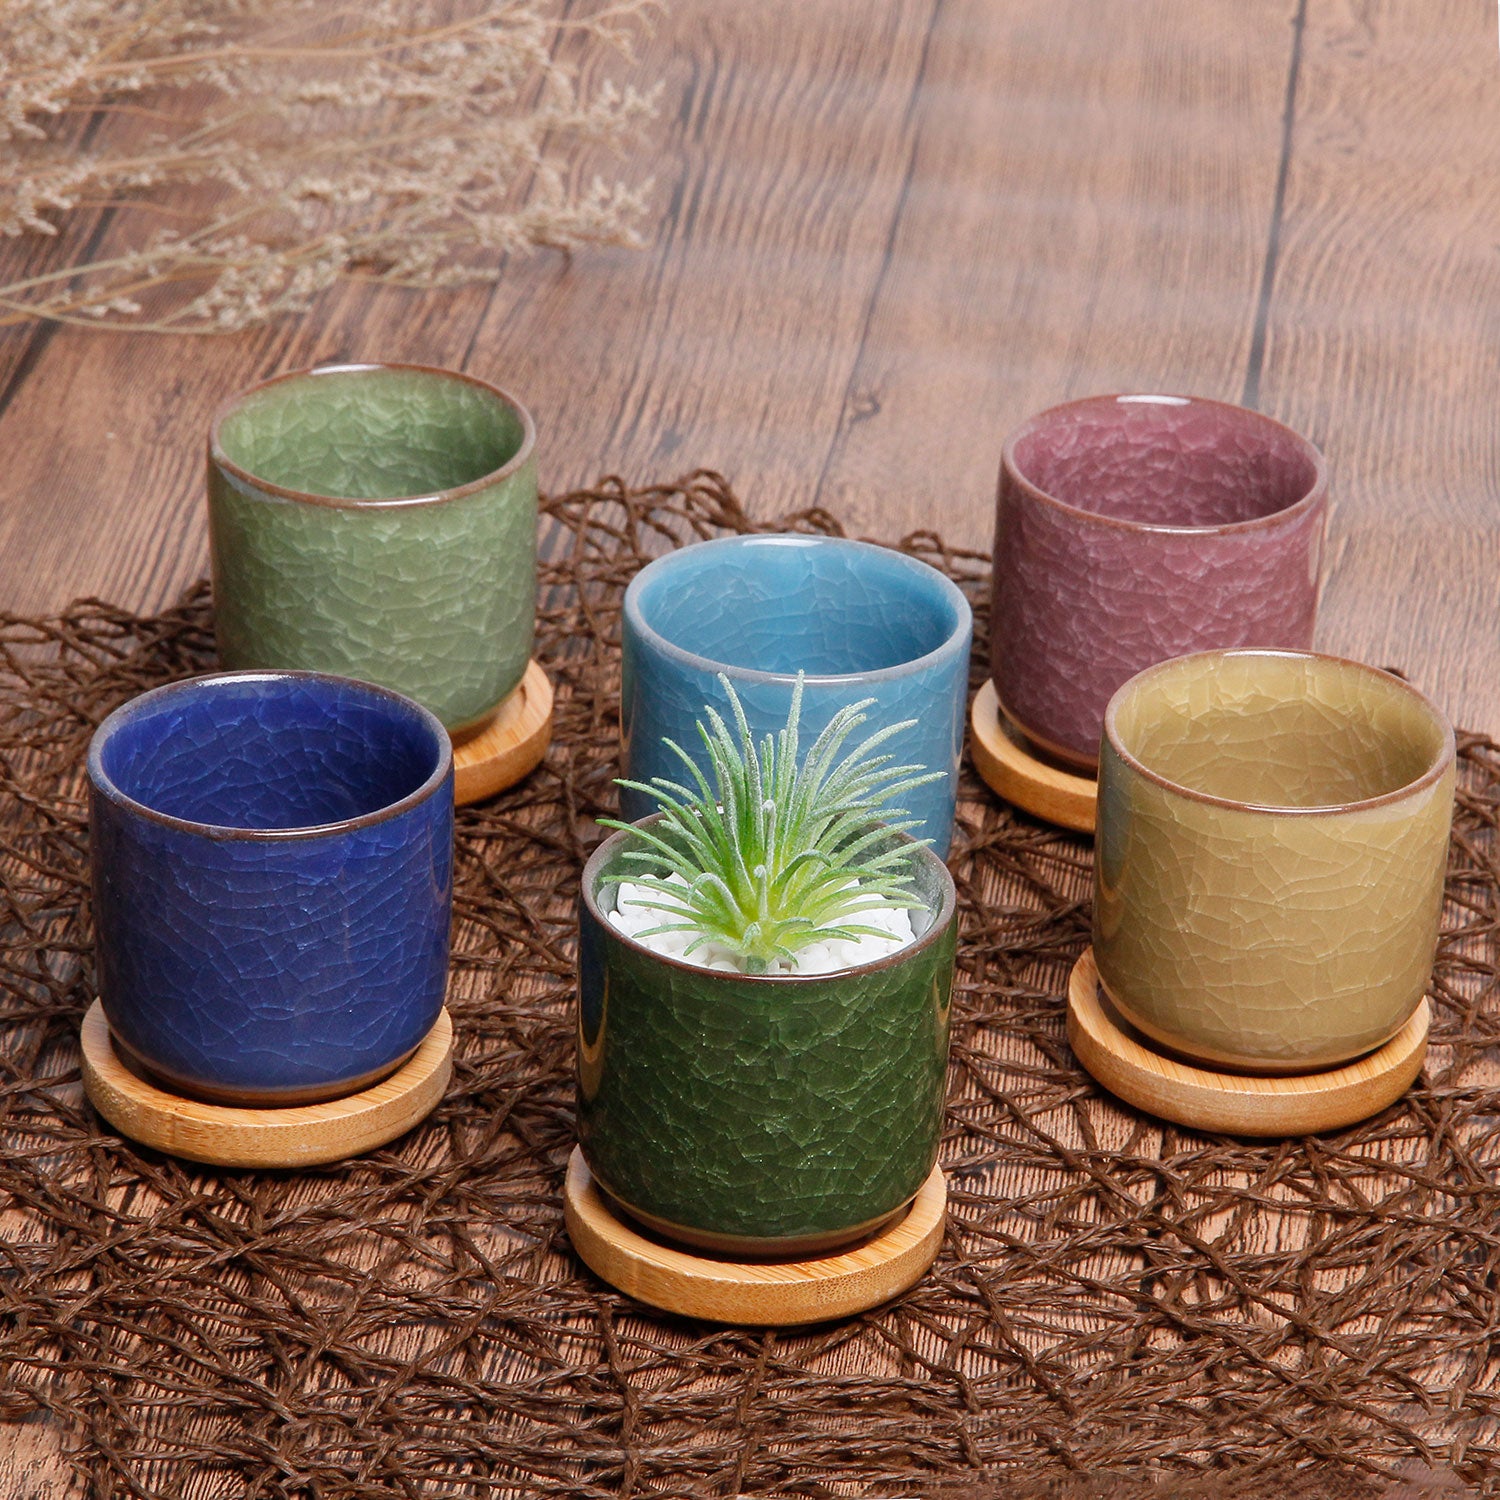 Ice Crack Pots-Small Ceramic Succulent Planter Pot with Drainage Hole, 2.4